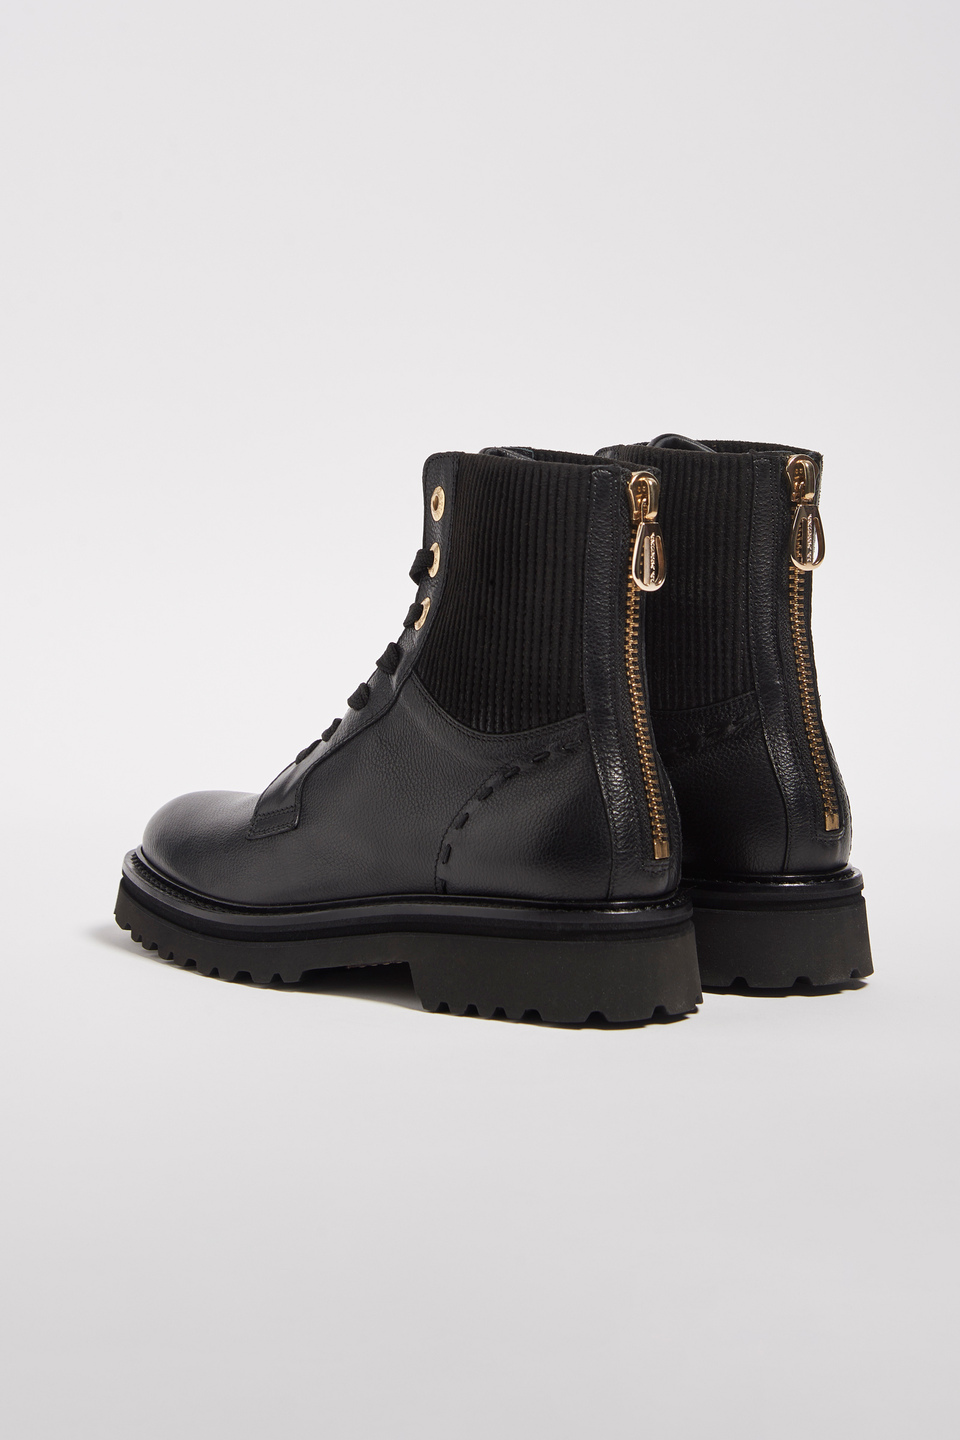 Brushed leather boots - La Martina - Official Online Shop